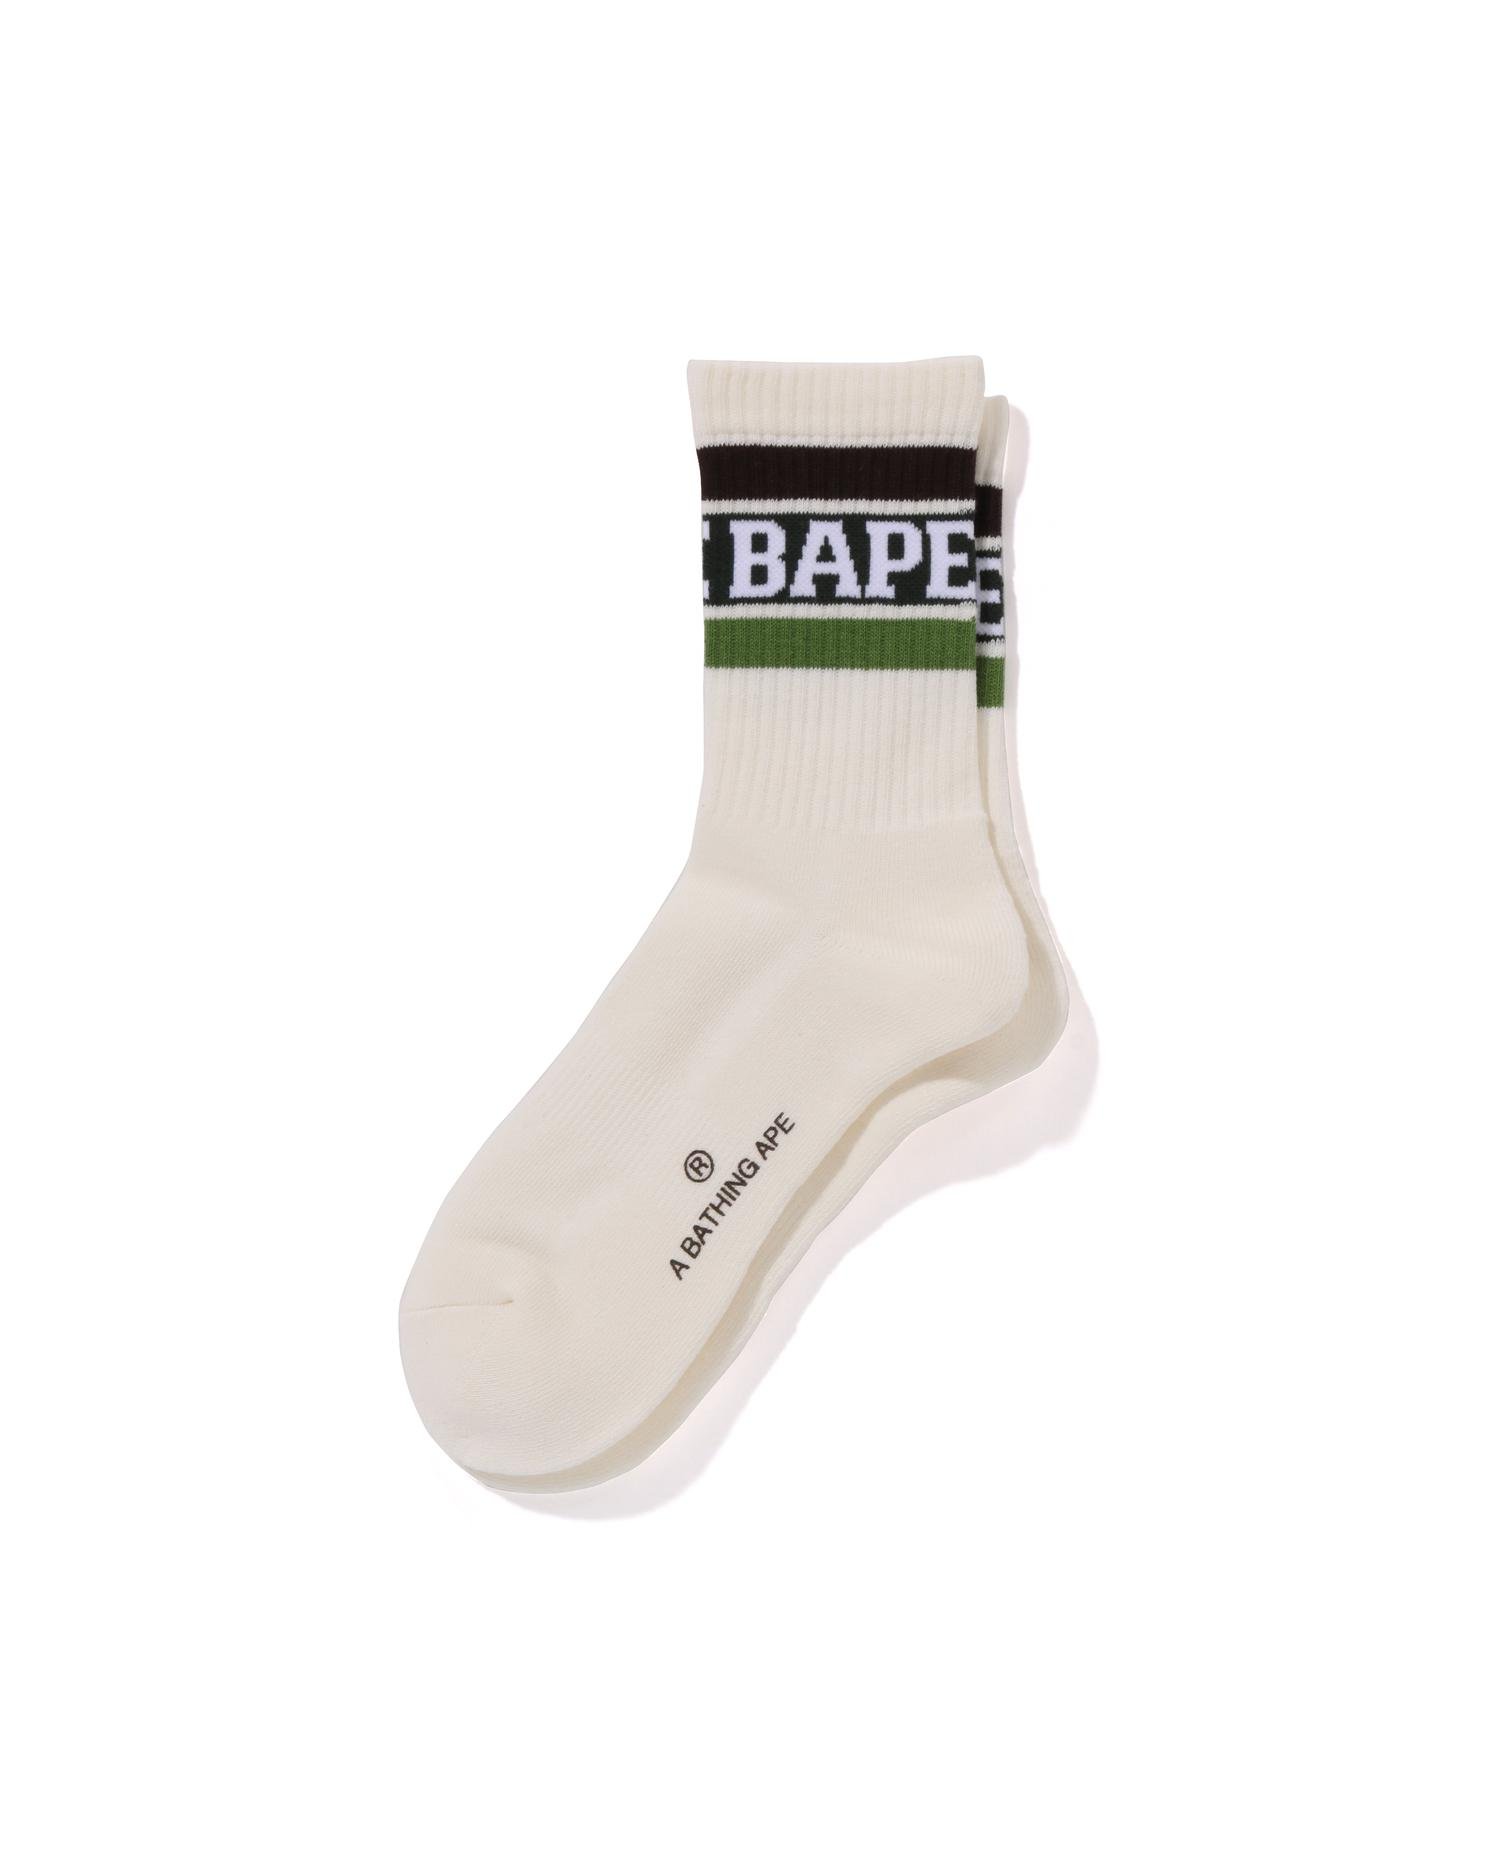 BAPE Line Socks by BAPE